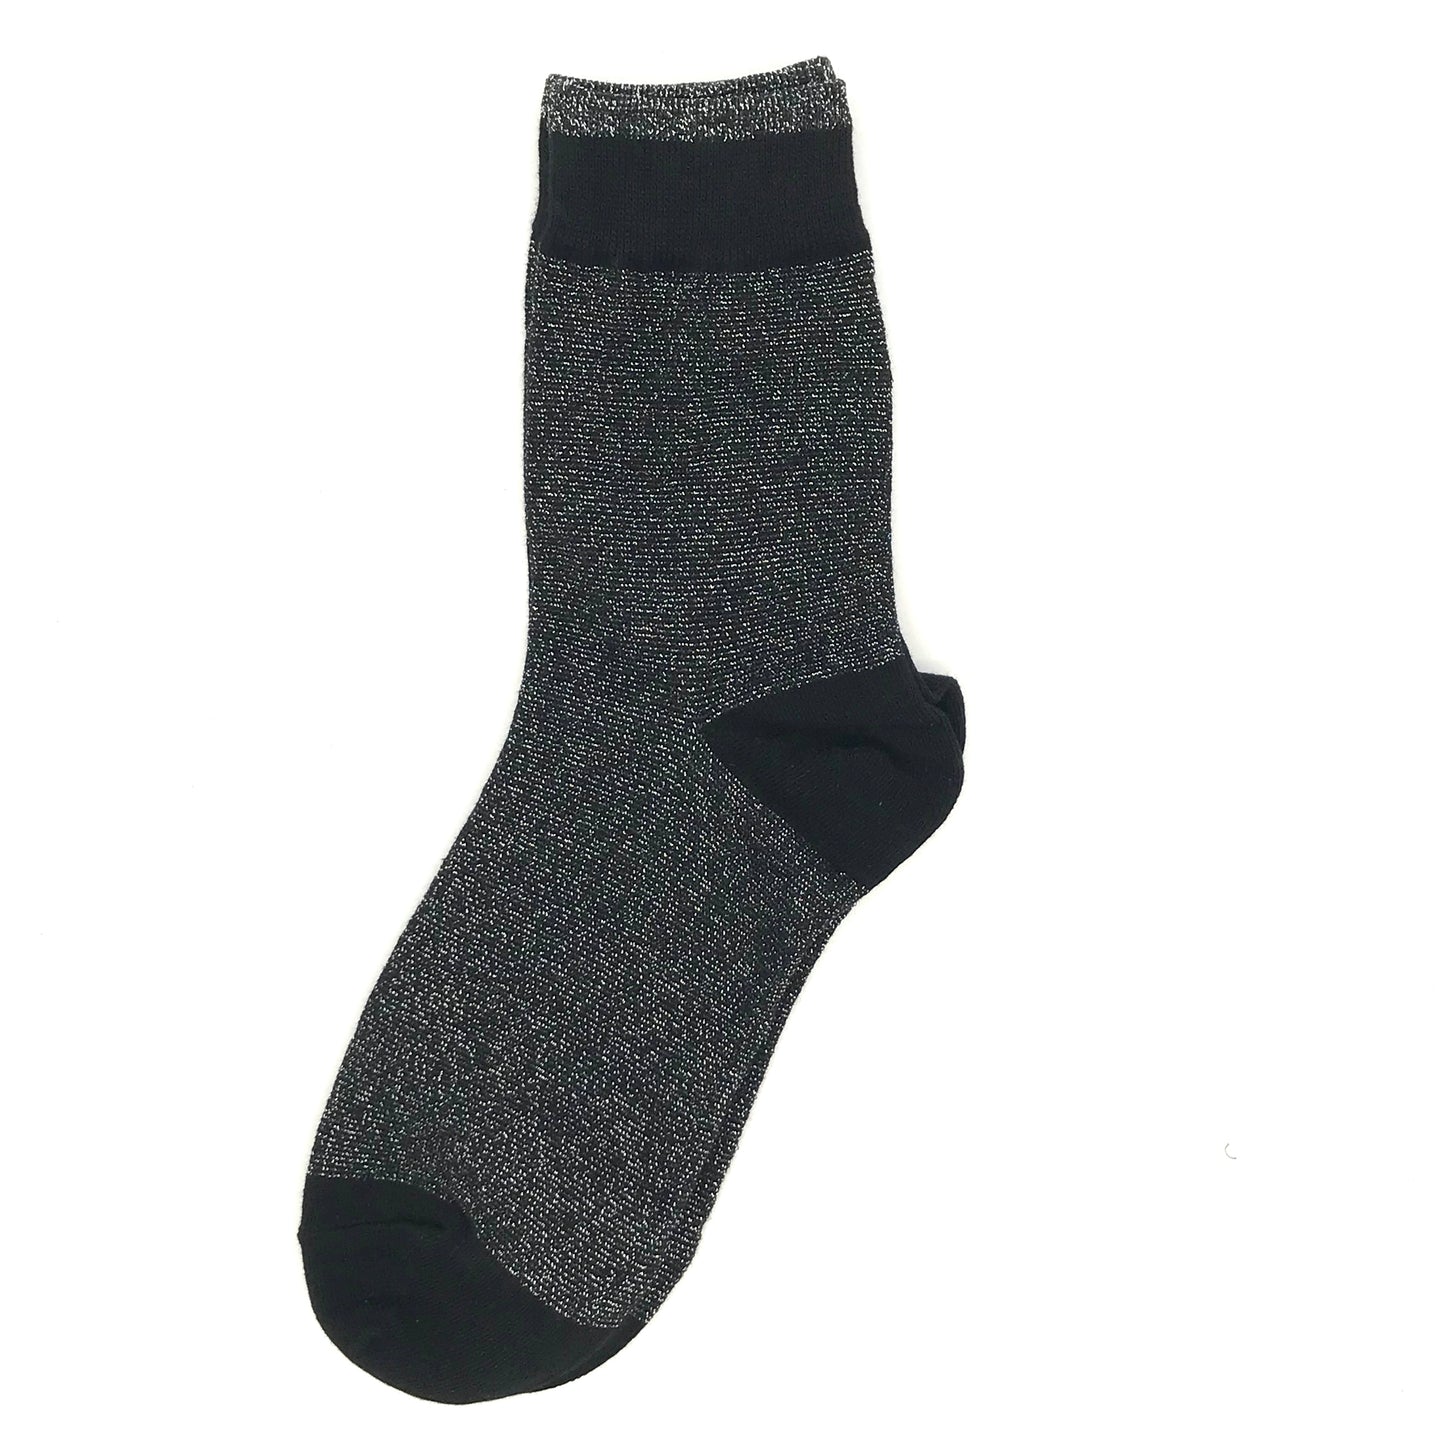 Tokyo socks